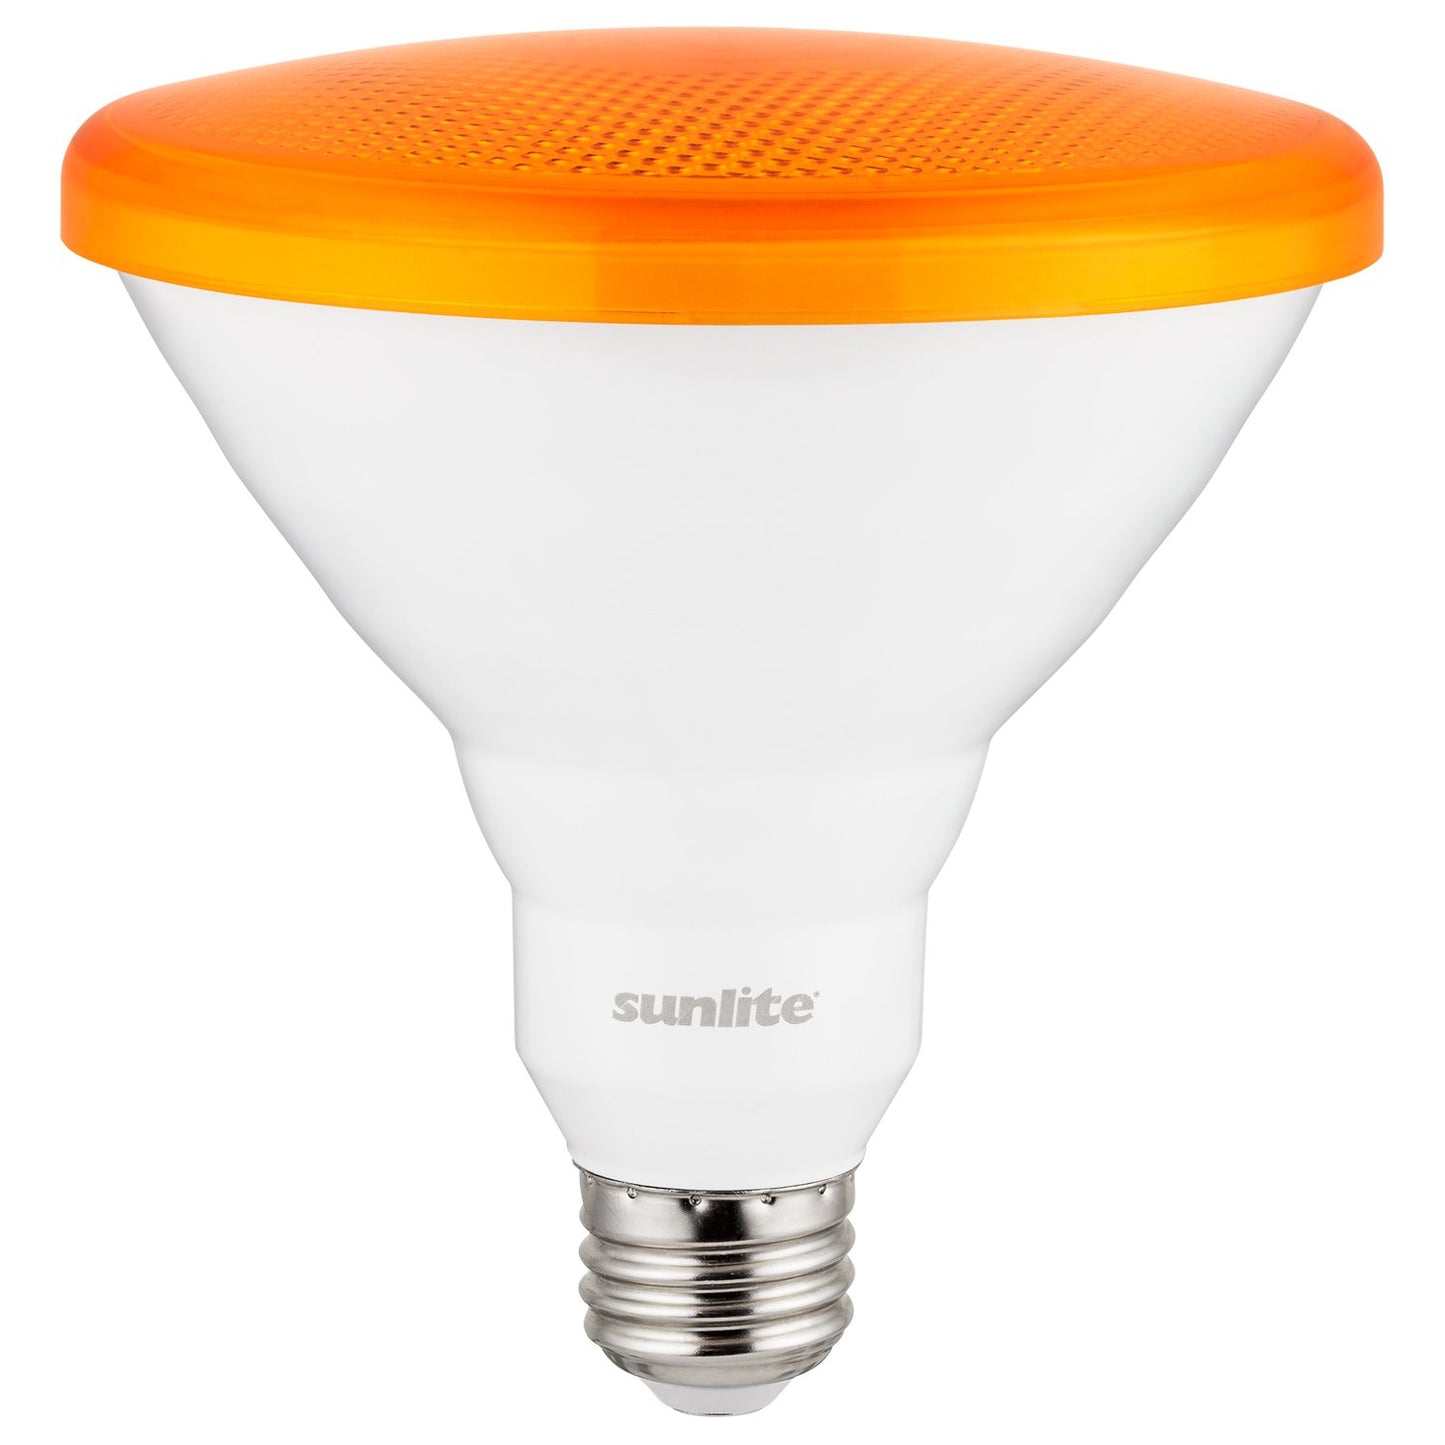 Sunlite LED PAR38 Orange Floodlight Bulb, 8W (25W Equivalent), Medium (E26) Base, Indoor, Outdoor, Wet Location, Turtle Safe and Wildlife Friendly, 25,000 Hour Lifespan, UL Listed